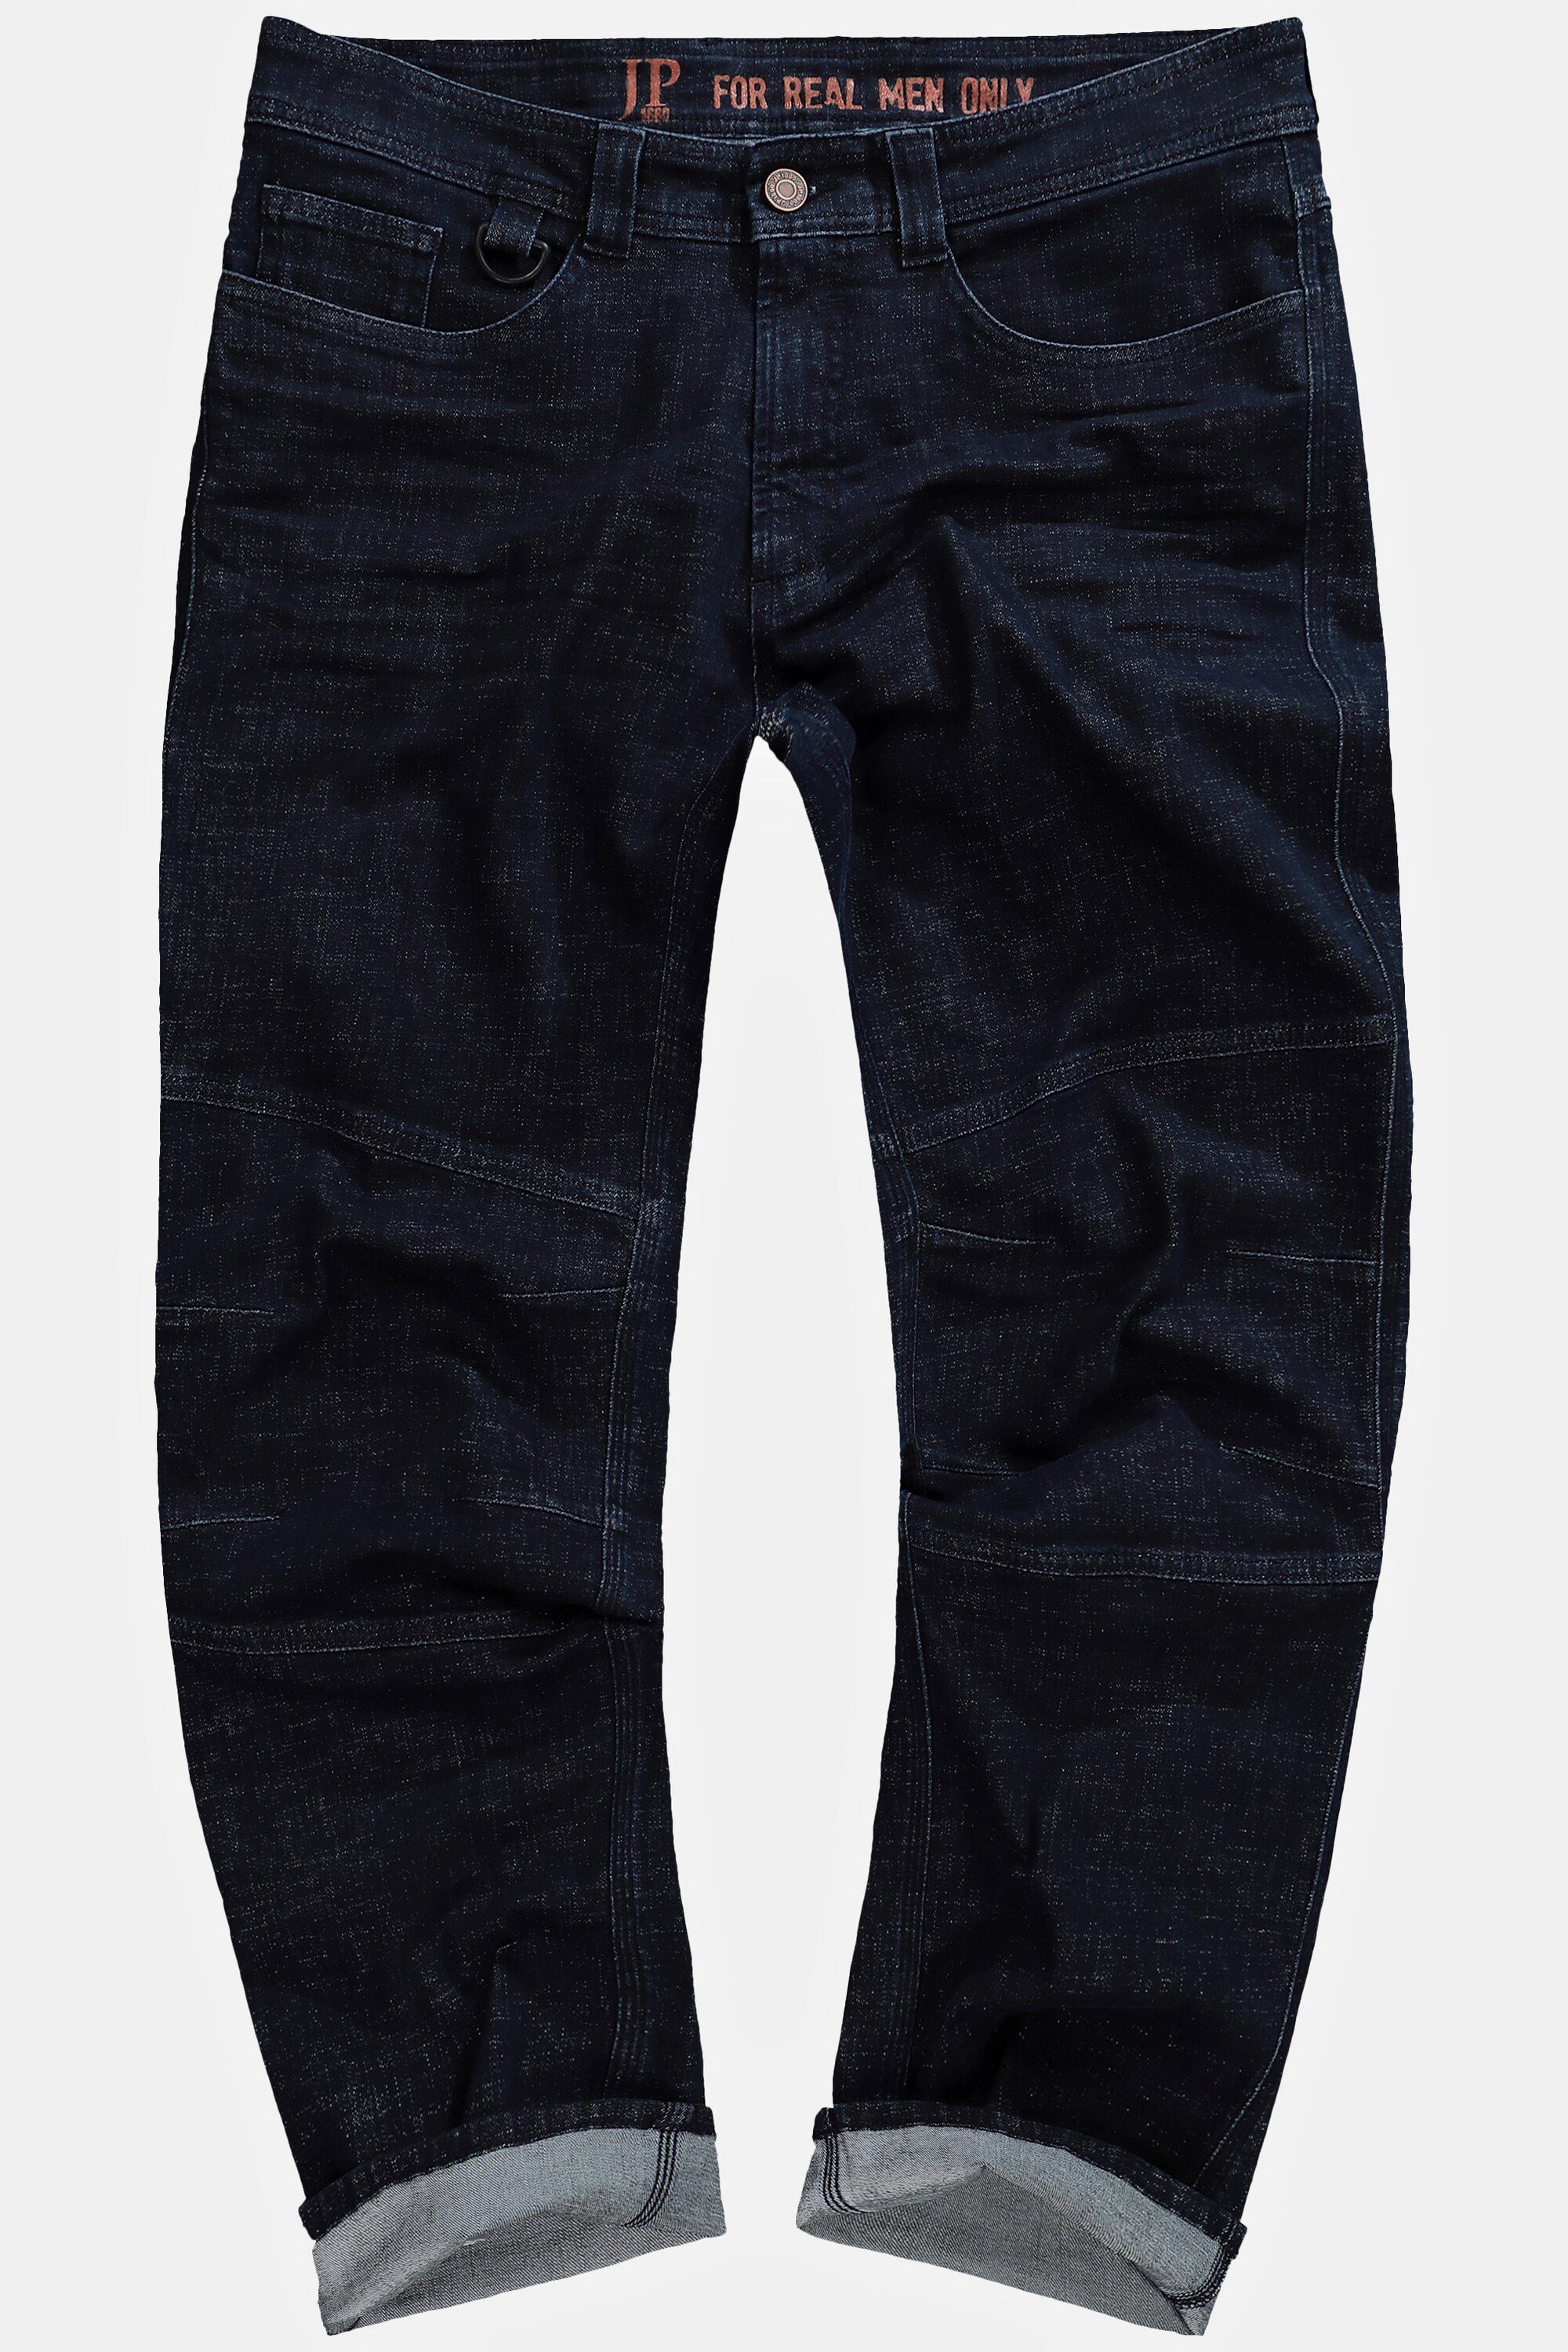 5-Pocket Fit JP1880 Cargohose Workwear Workwear-Jeans Denim Regular